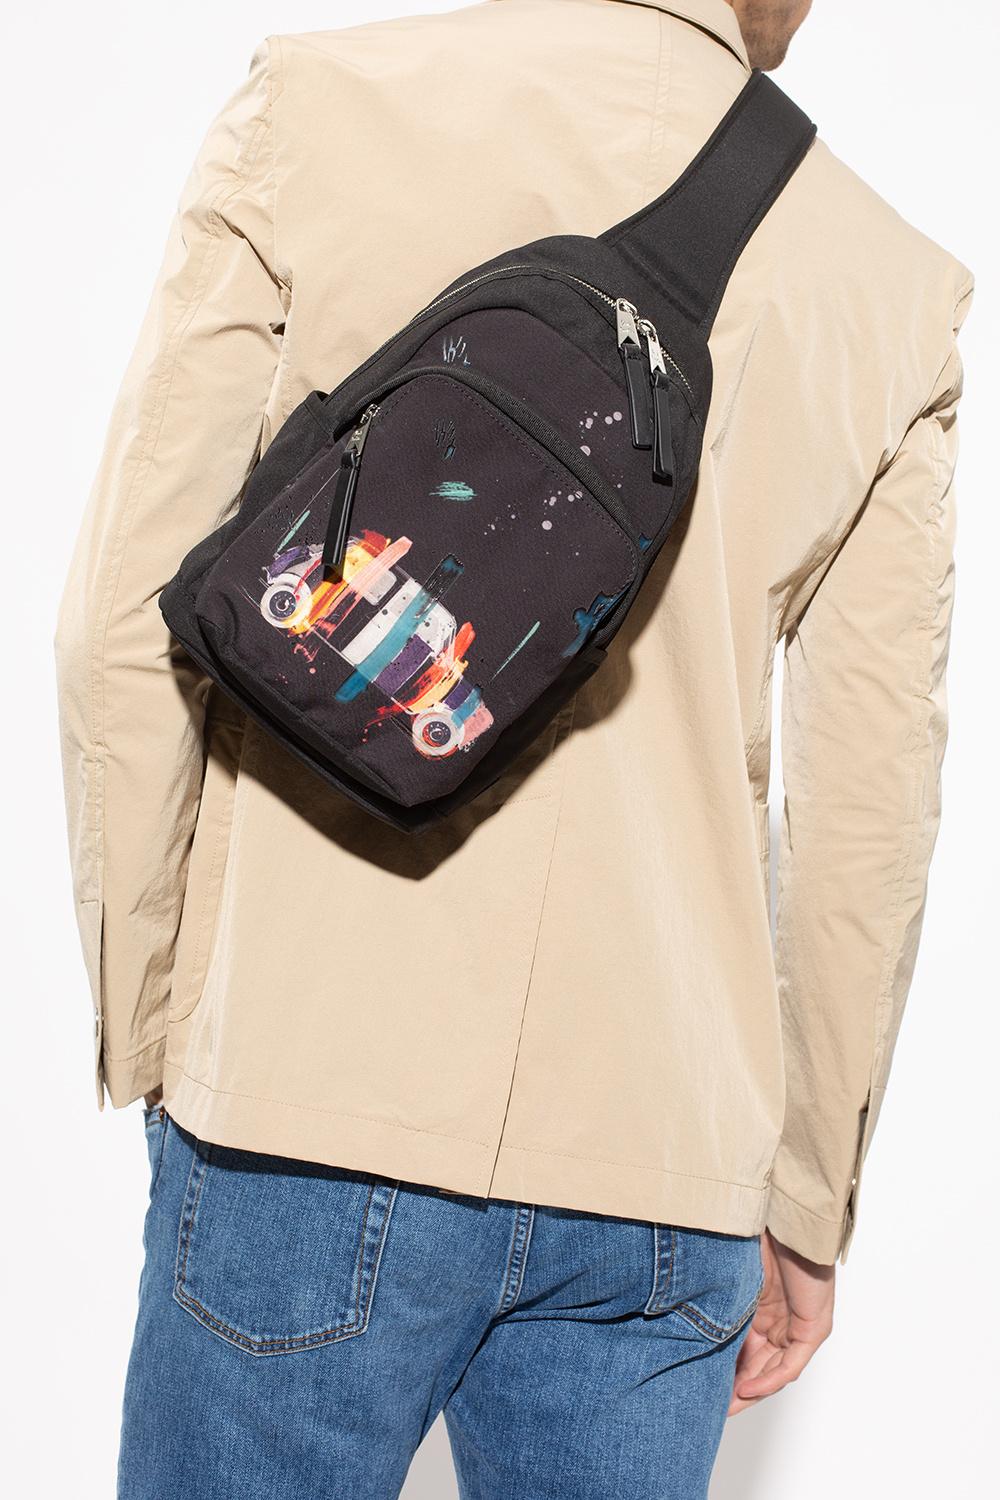 Paul Smith Mini Cooper Messenger/Shoulder Bag, Men's Fashion, Bags